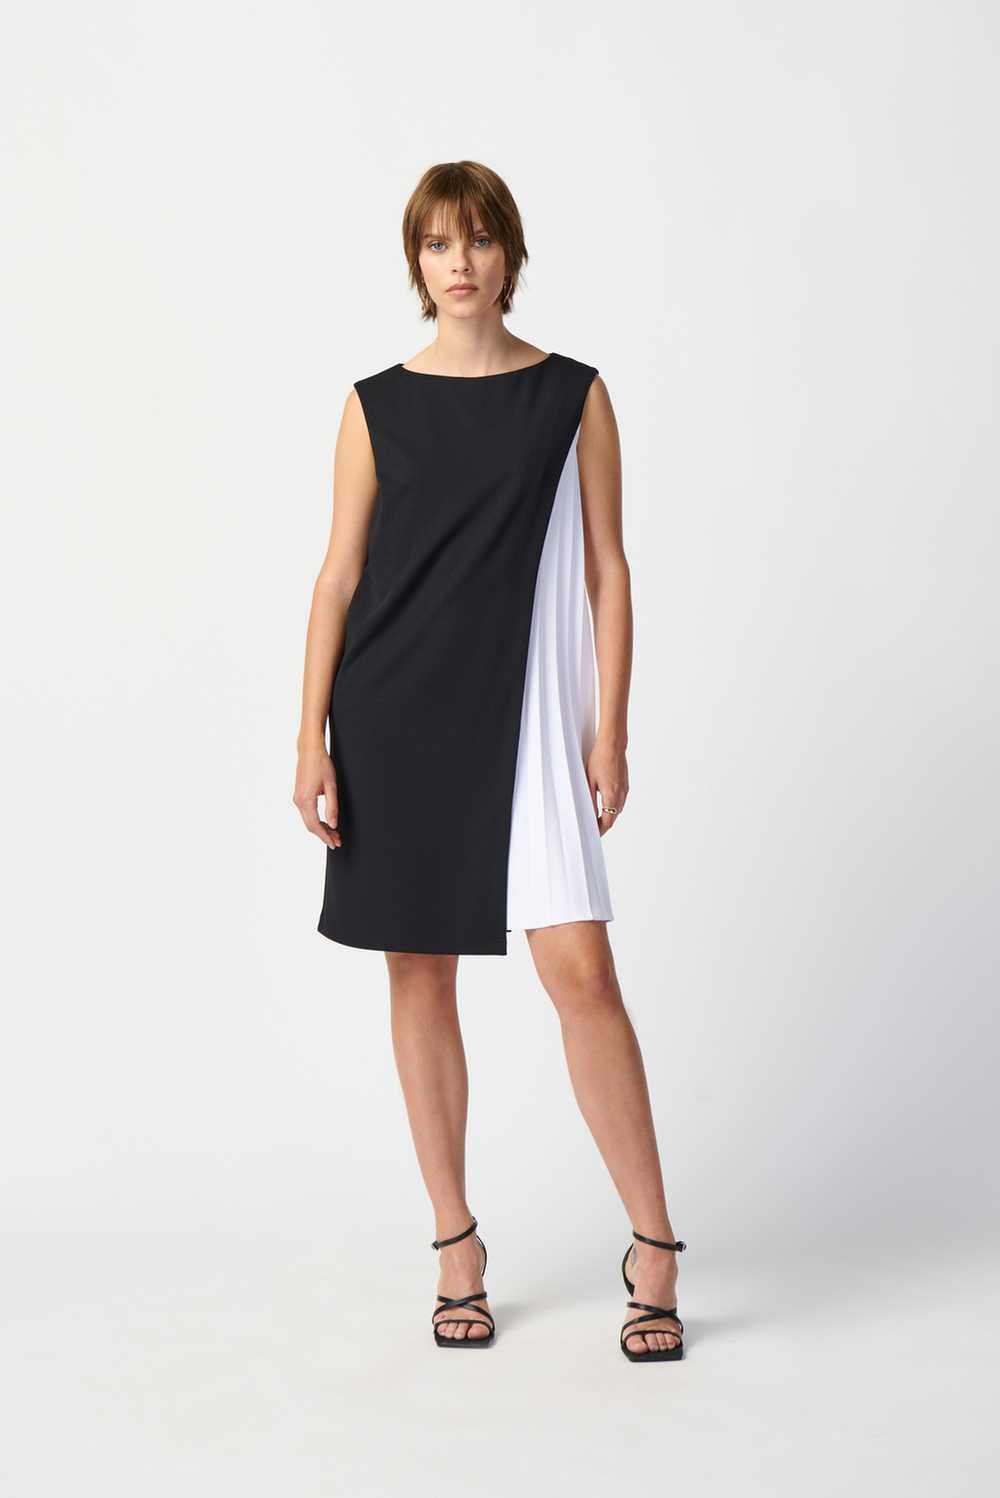 Two-Tone Pleated Tank Dress Style 241160. Black/vanilla